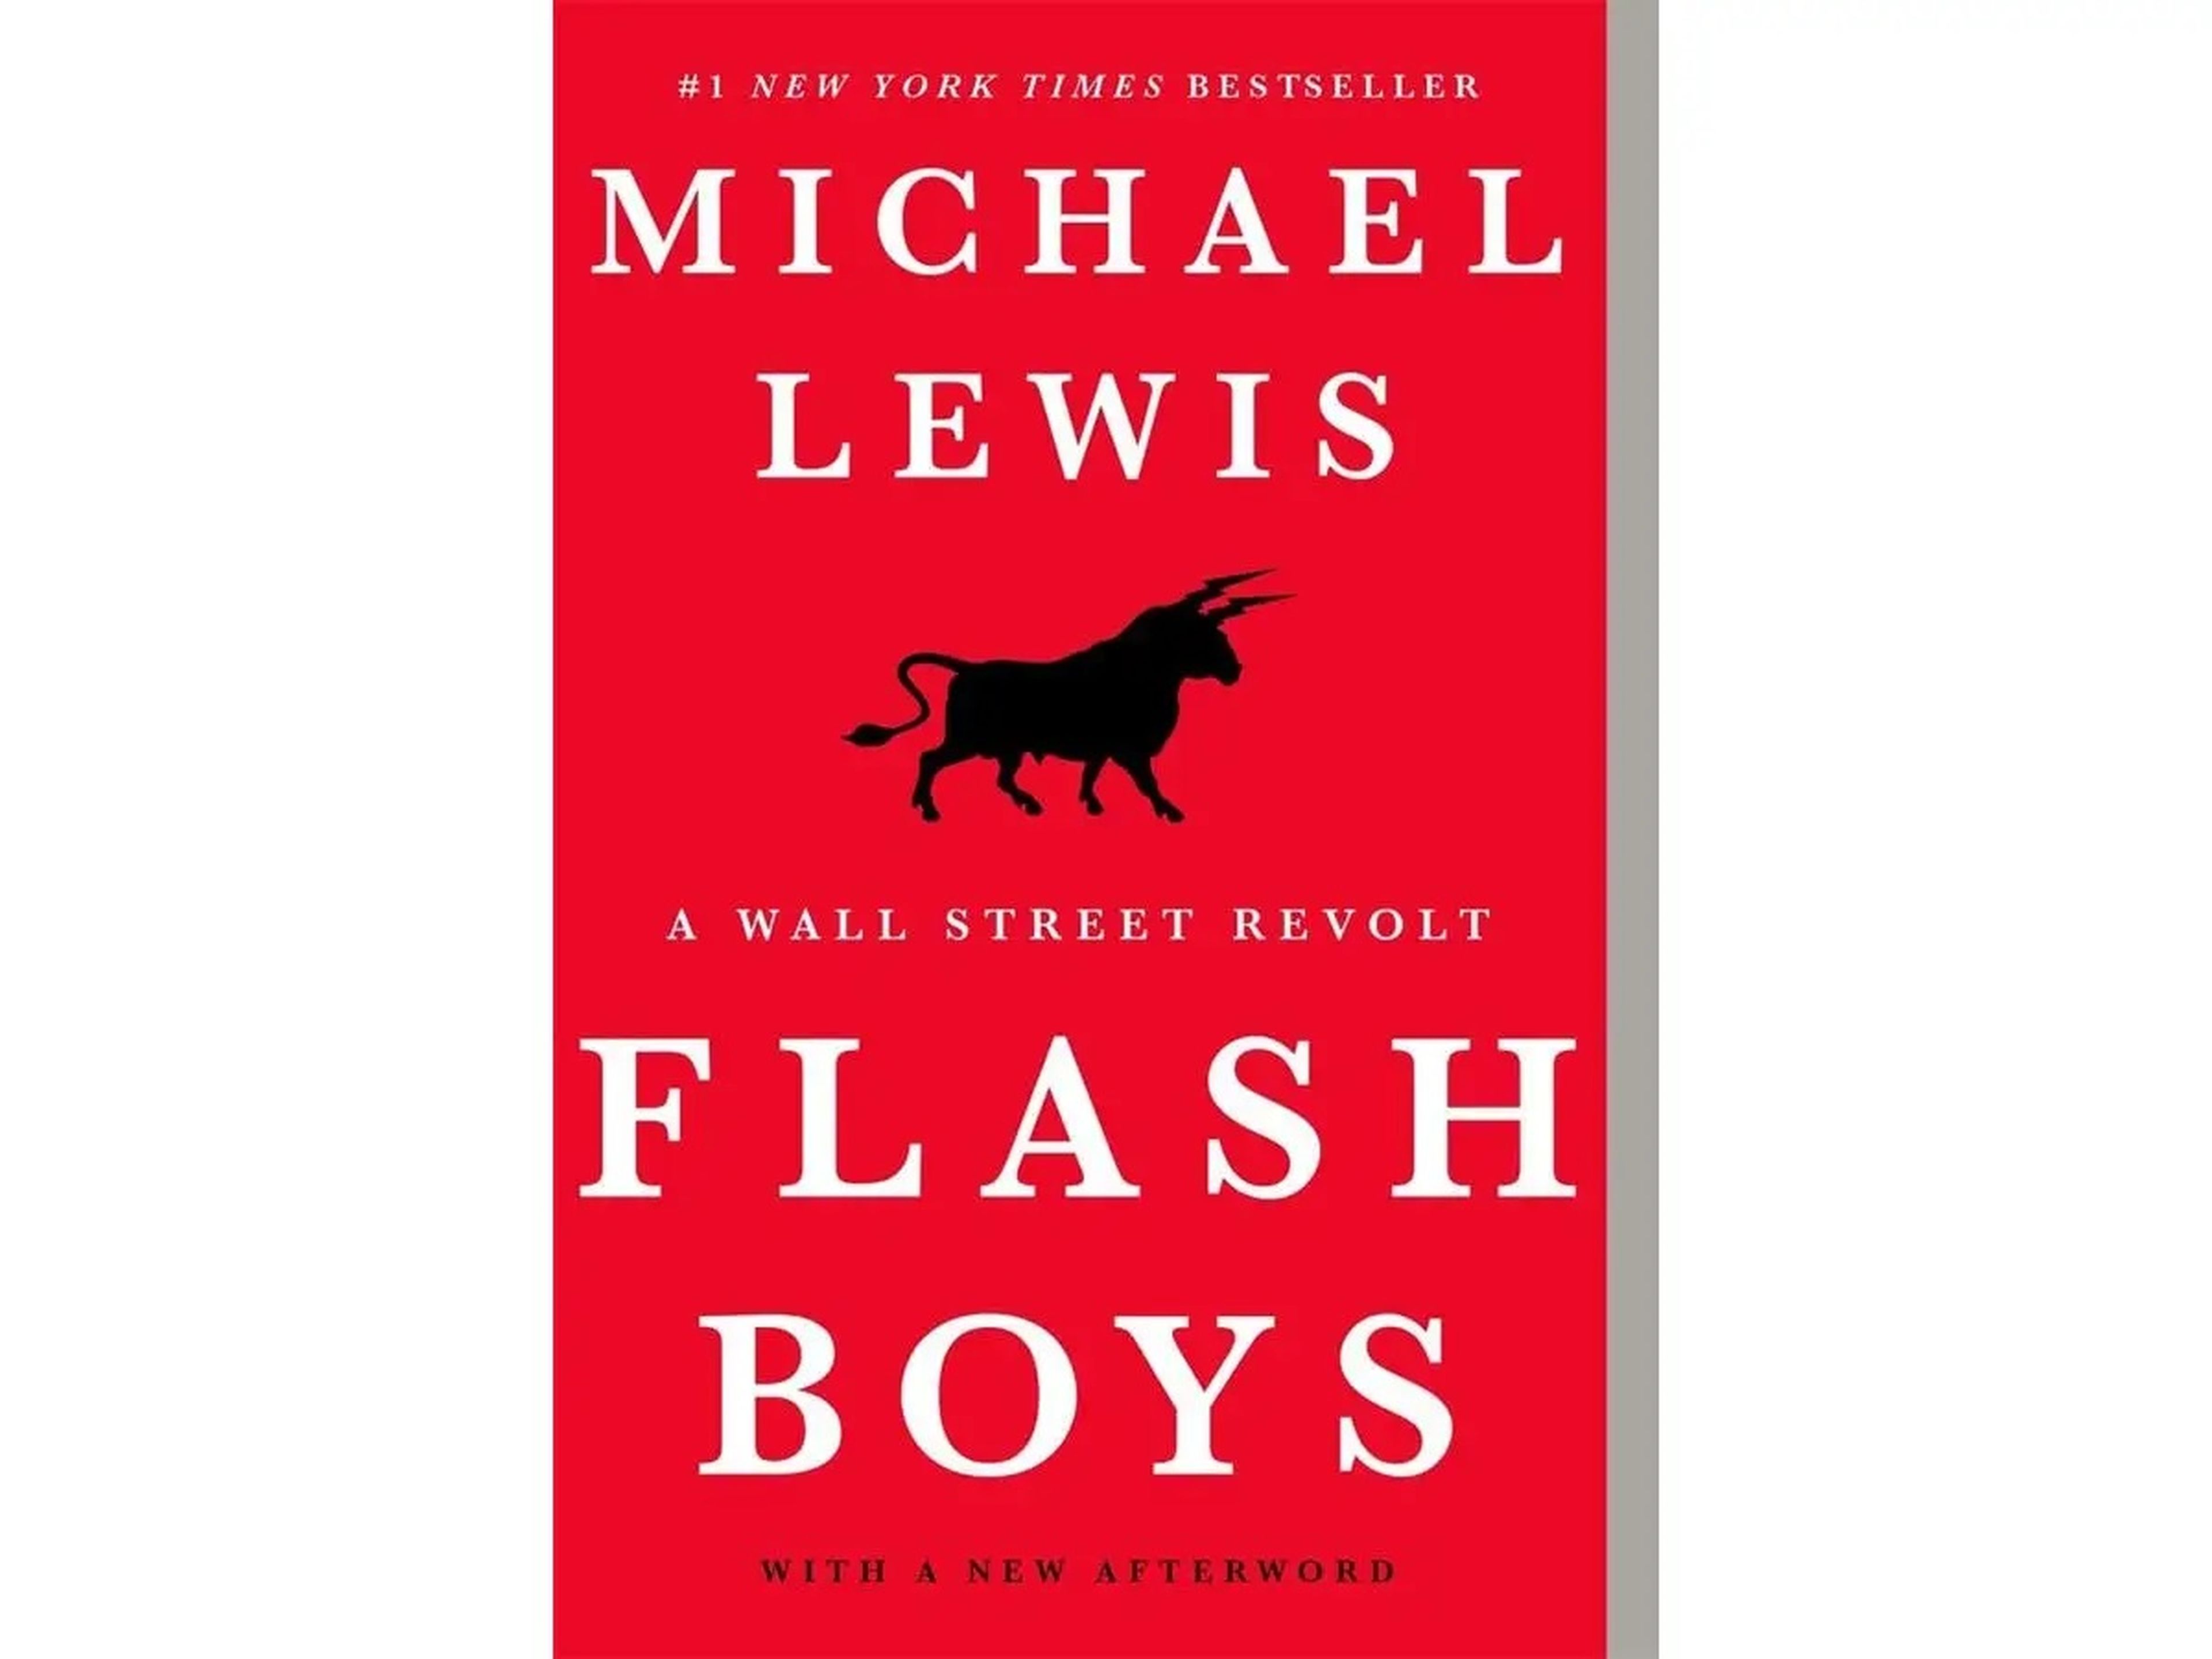 Flash Boys: La revuelta de Wall Street, de Michael Lewis.